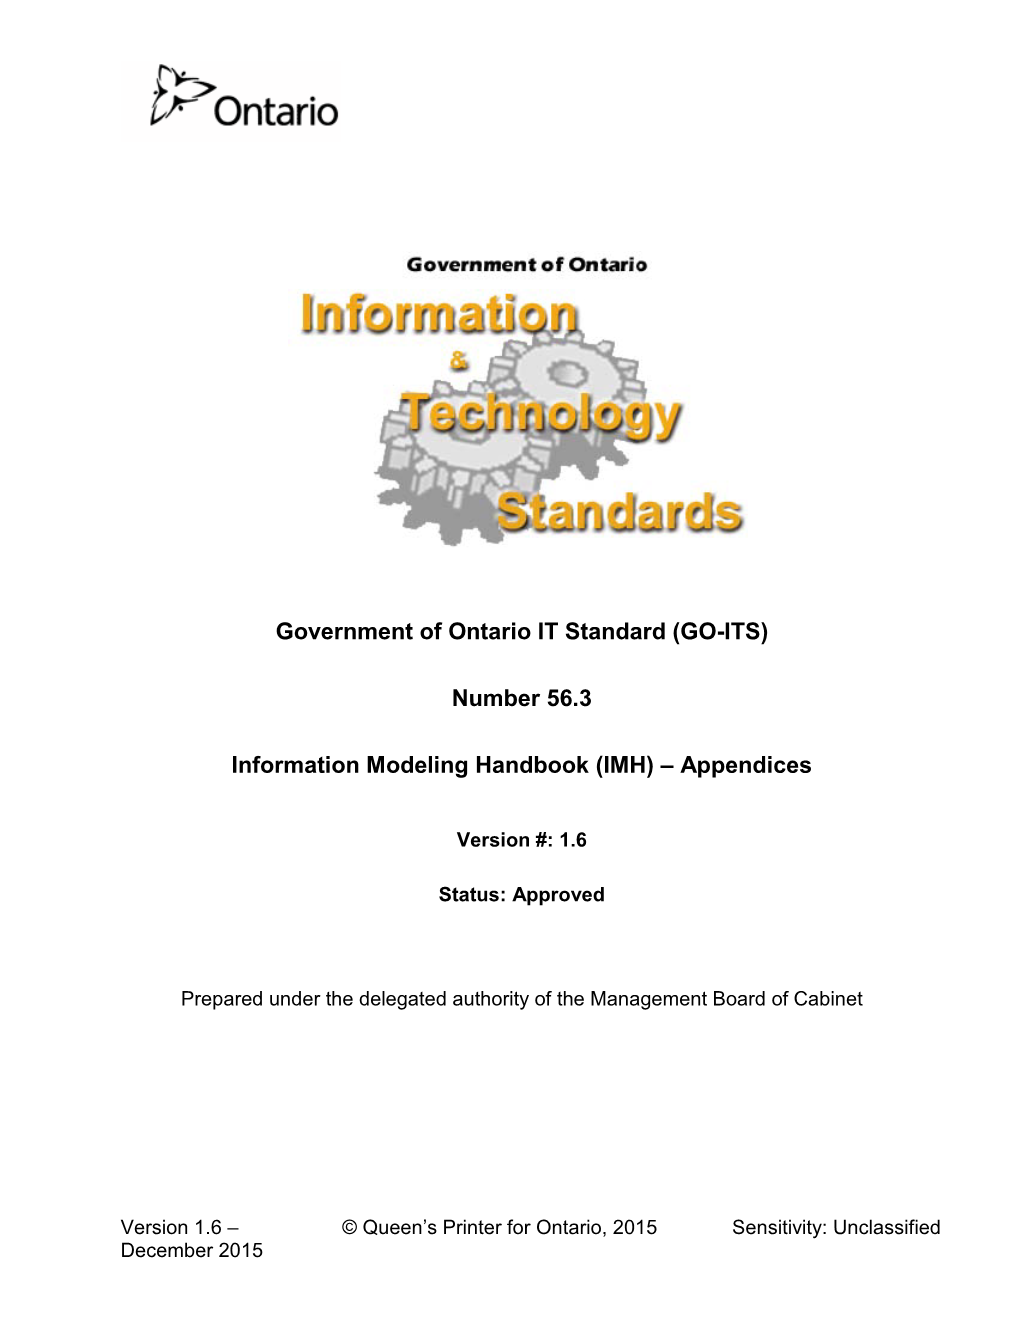 GO-ITS 56.3 Information Modeling Handbook, Appendices